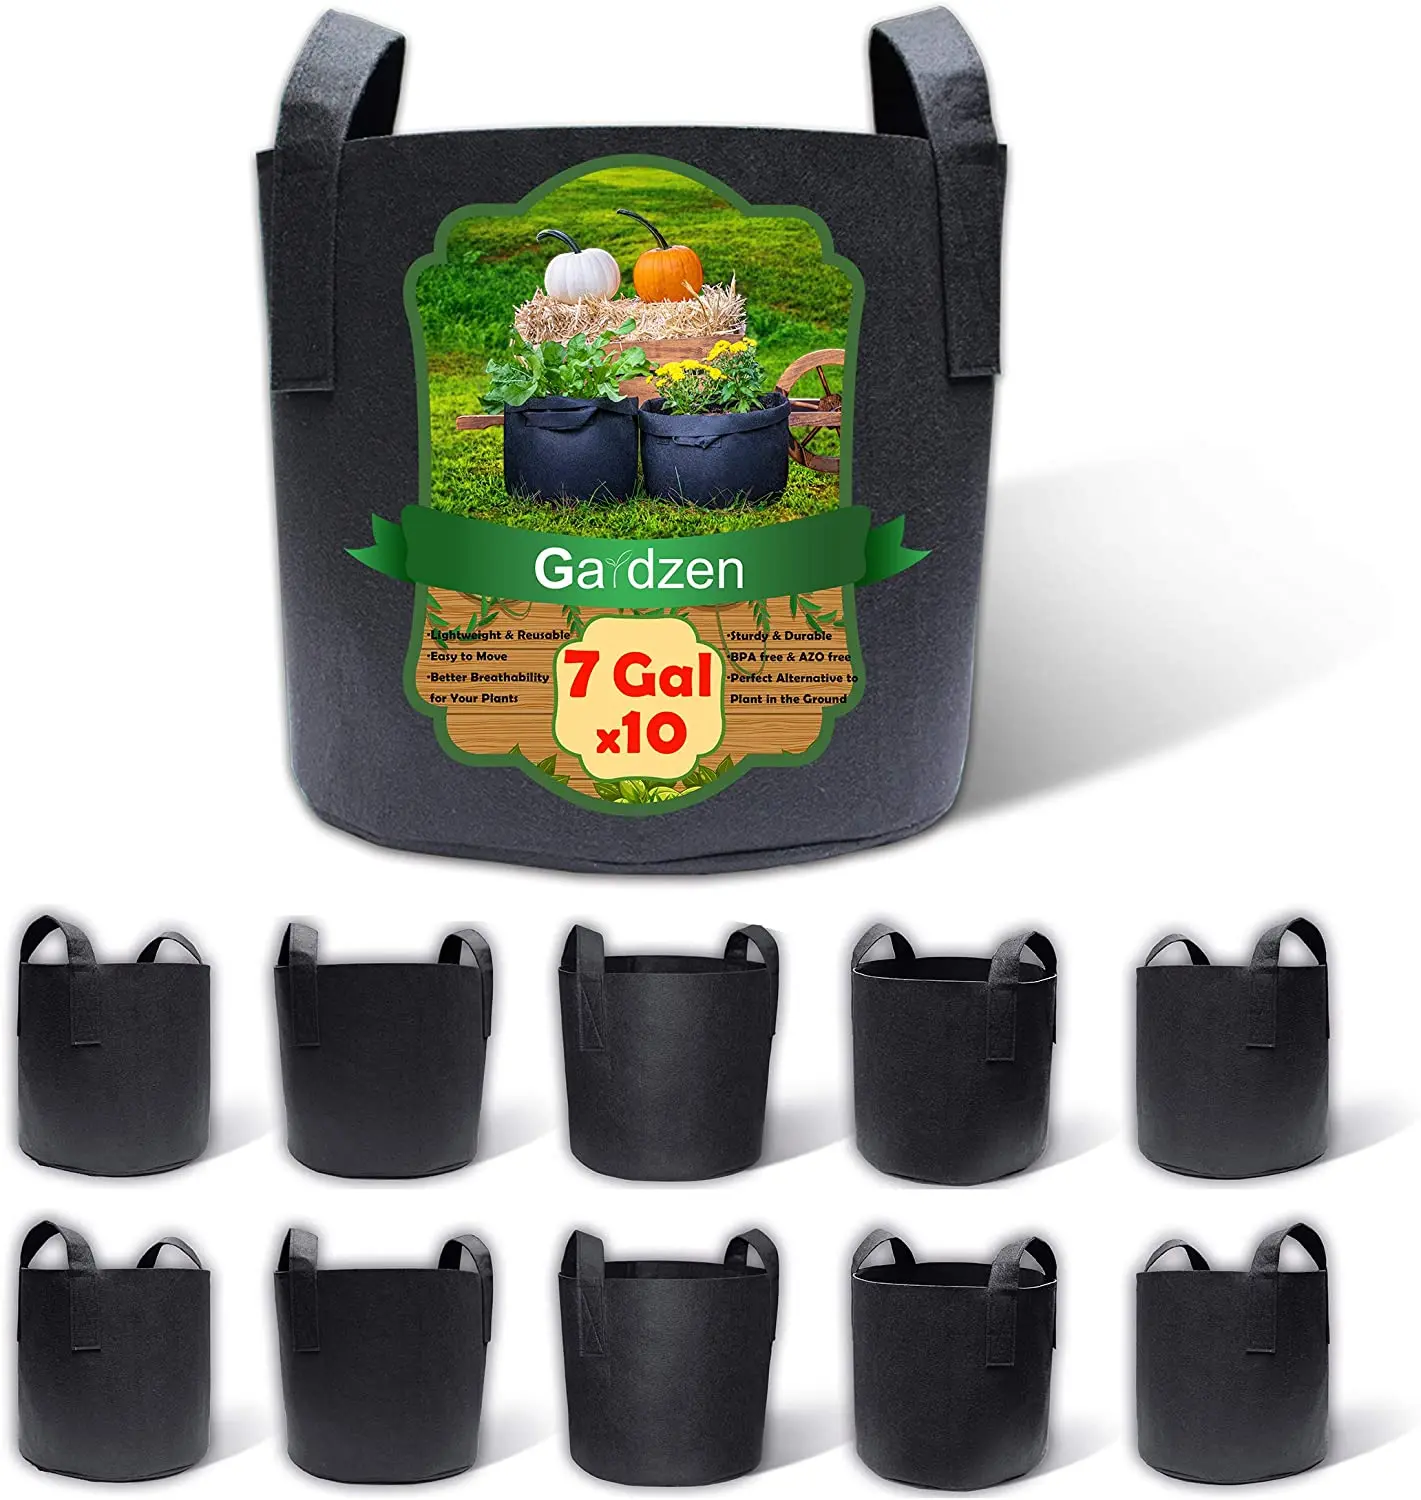 3 Gallon/5 Gallon/7 Gallon Reusable and Durable Aeration Fabric Pots Container with Strap Handles TIMESETL 6 Pack Garden Grow Bags 